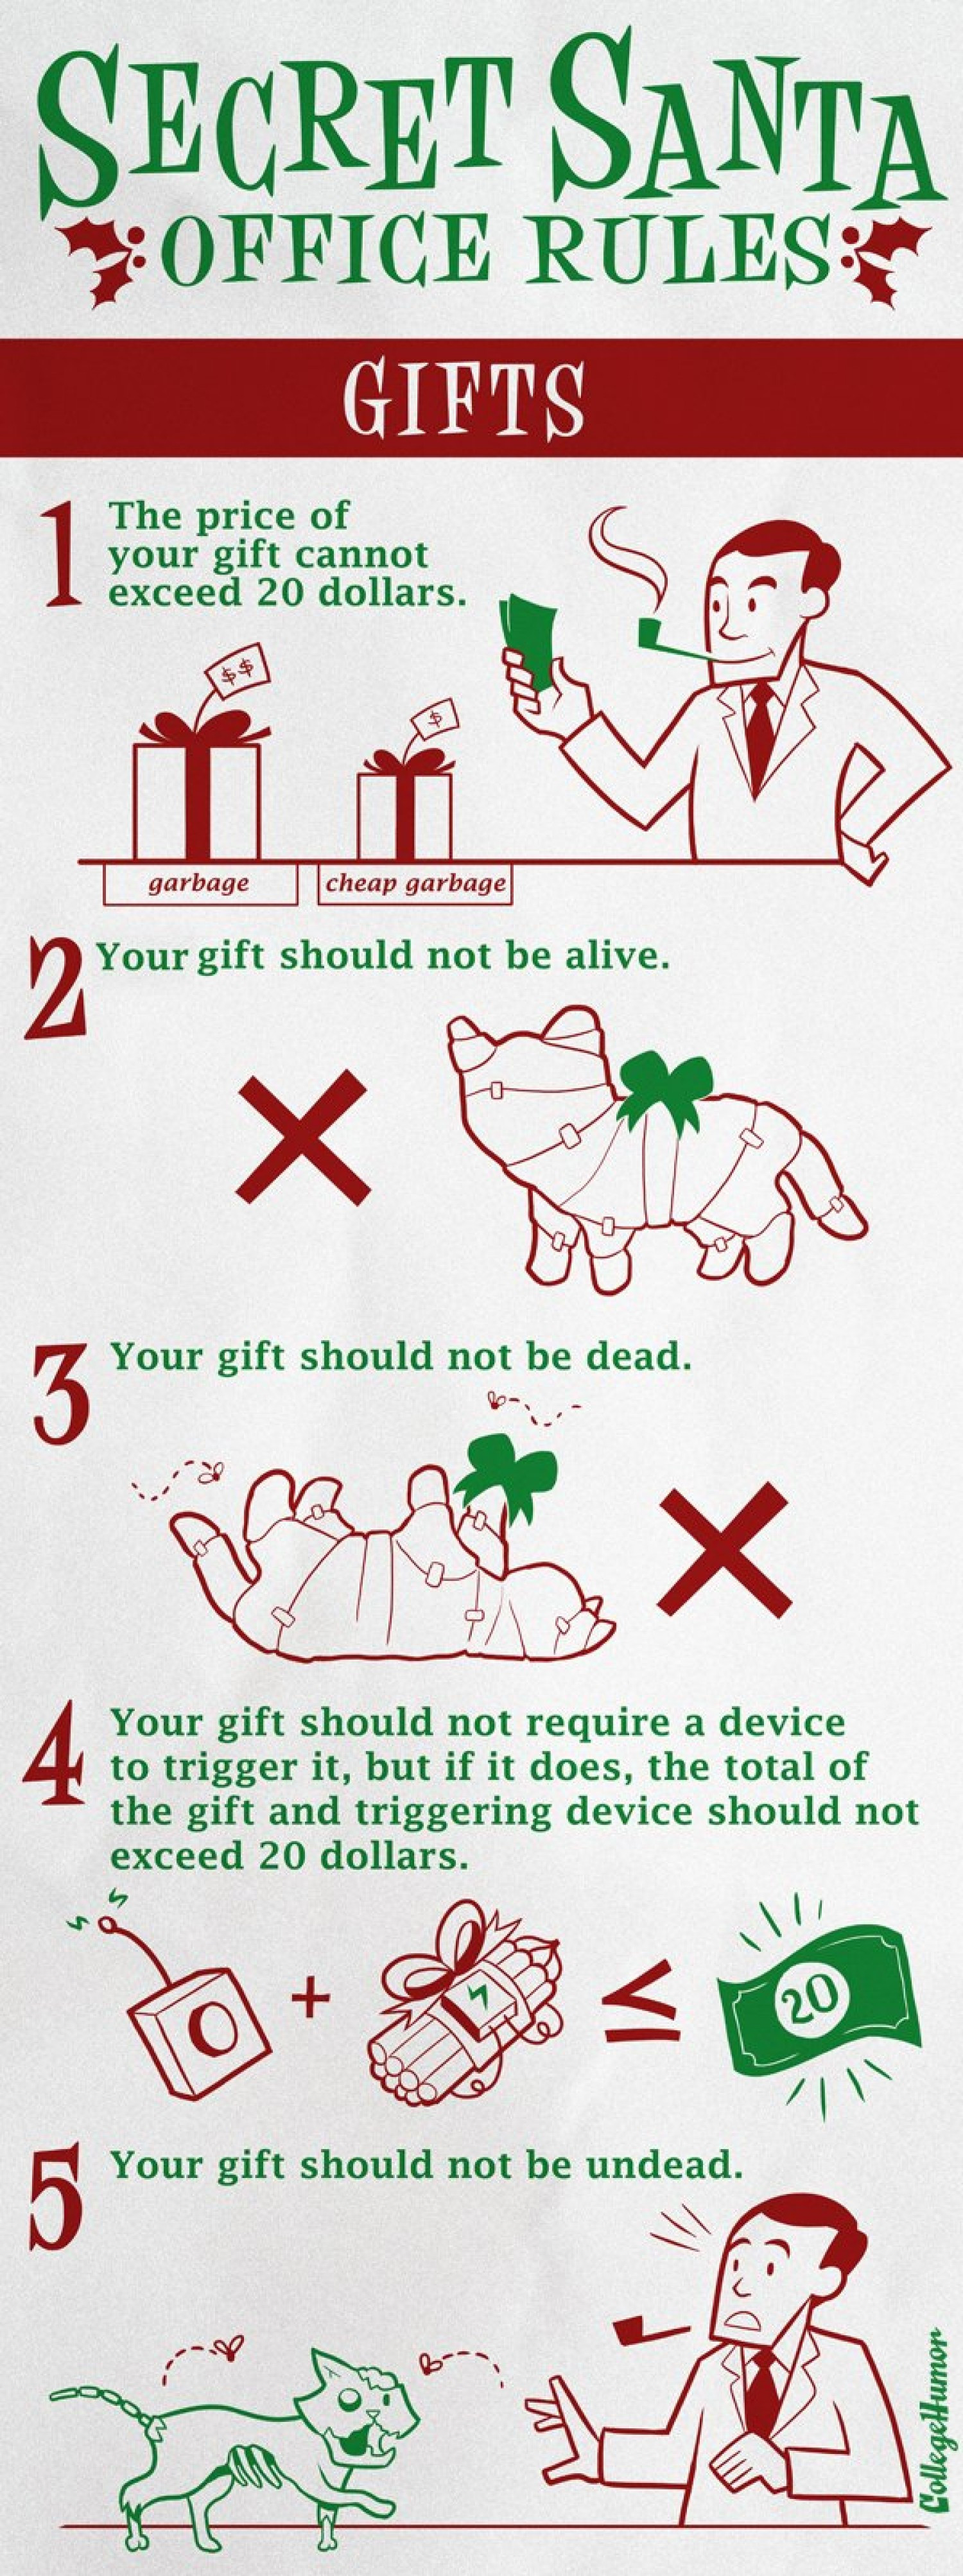 Best ideas about Office Secret Santa Gift Ideas
. Save or Pin Secret Santa fice Rules Now.